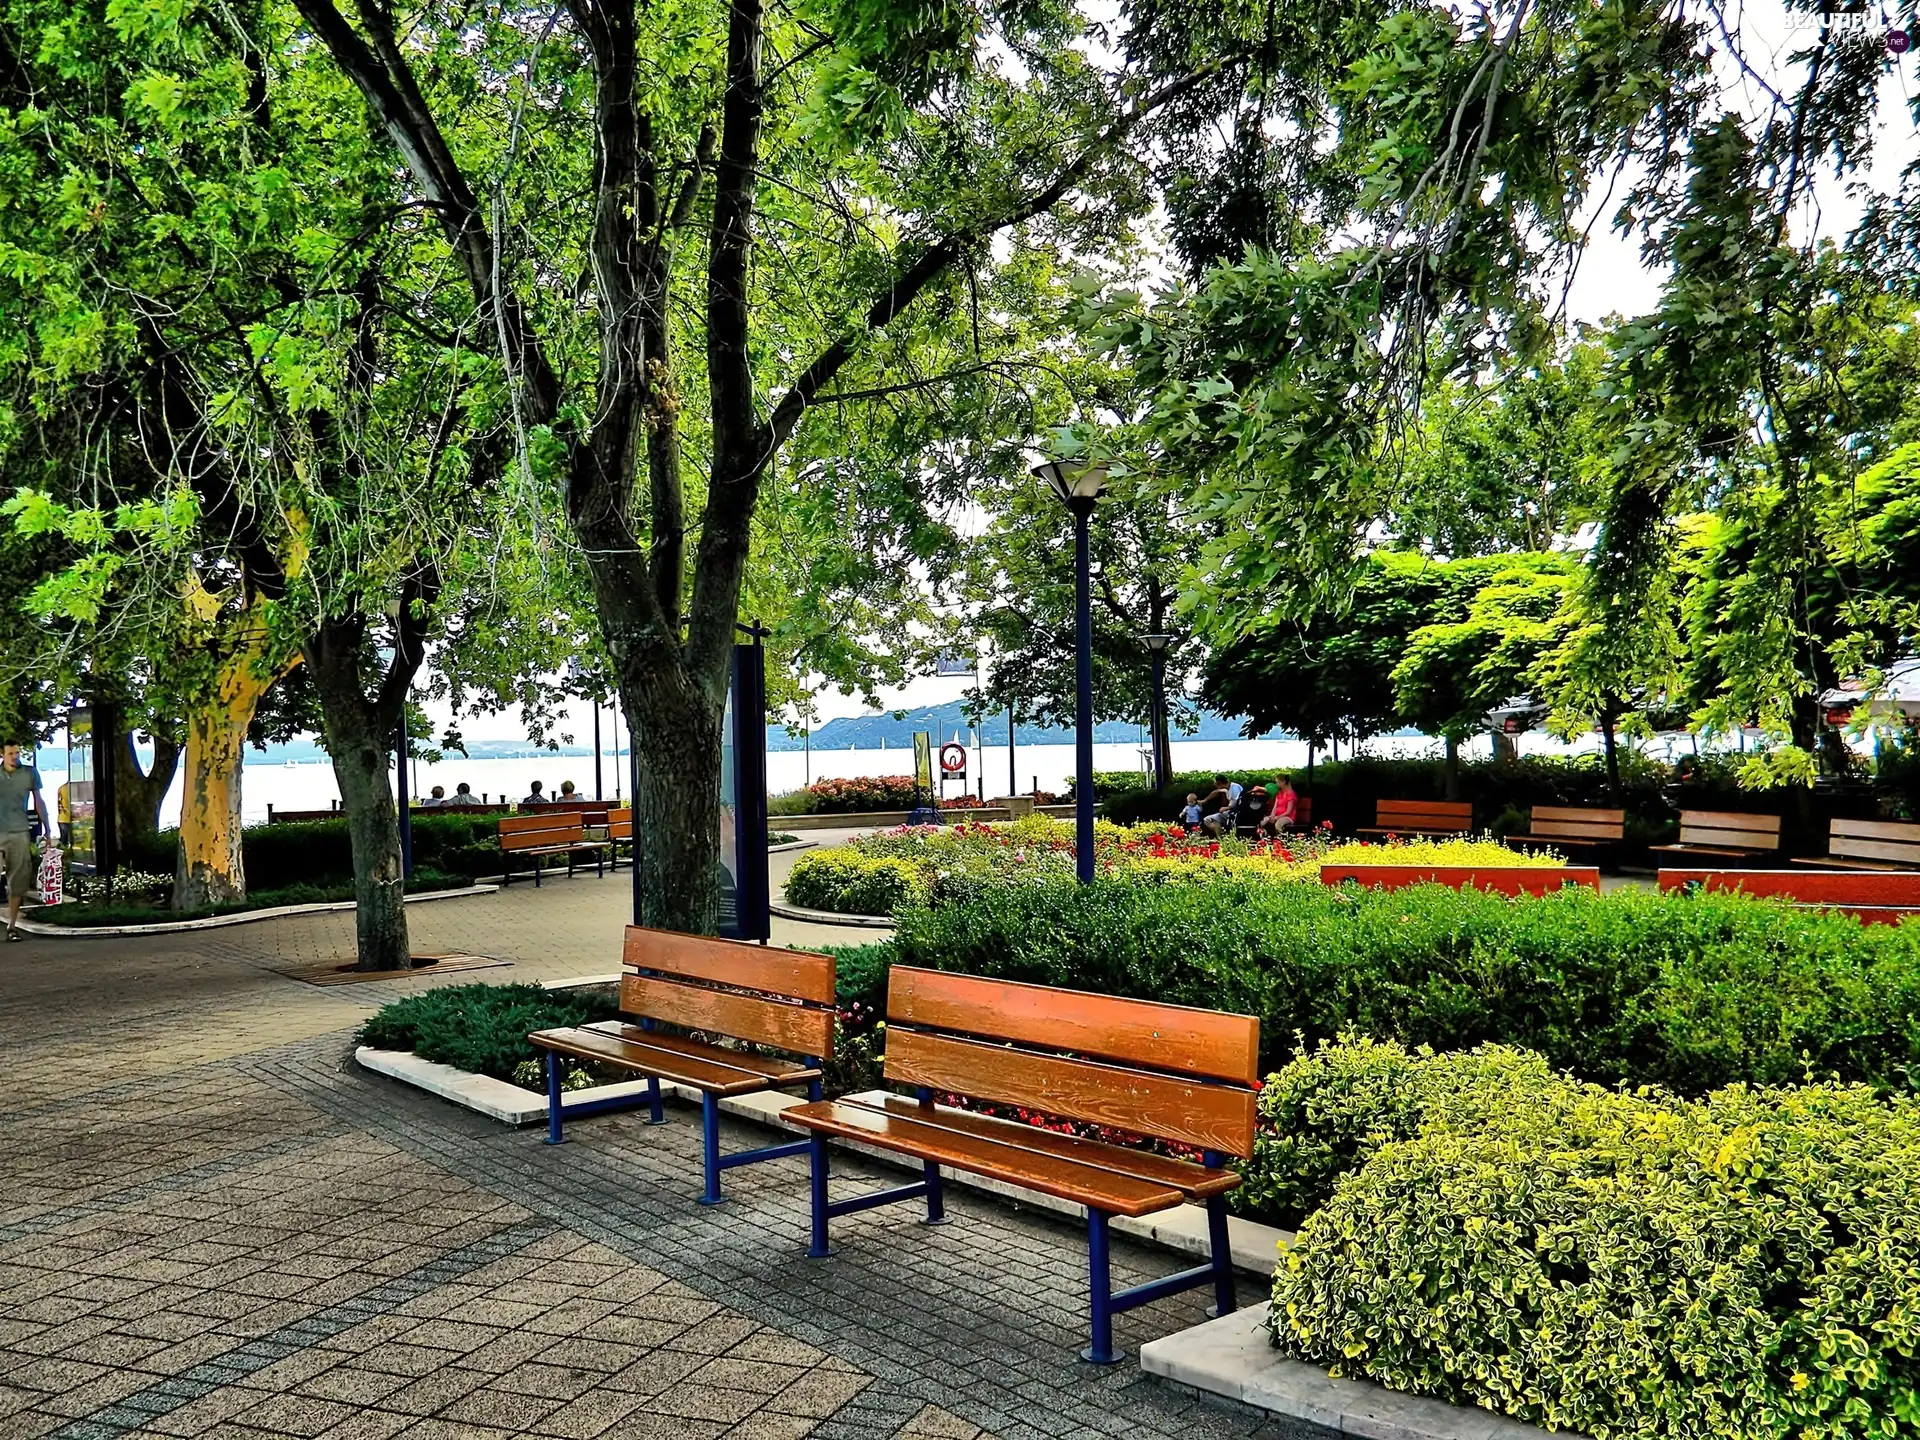 lake, Park, bench